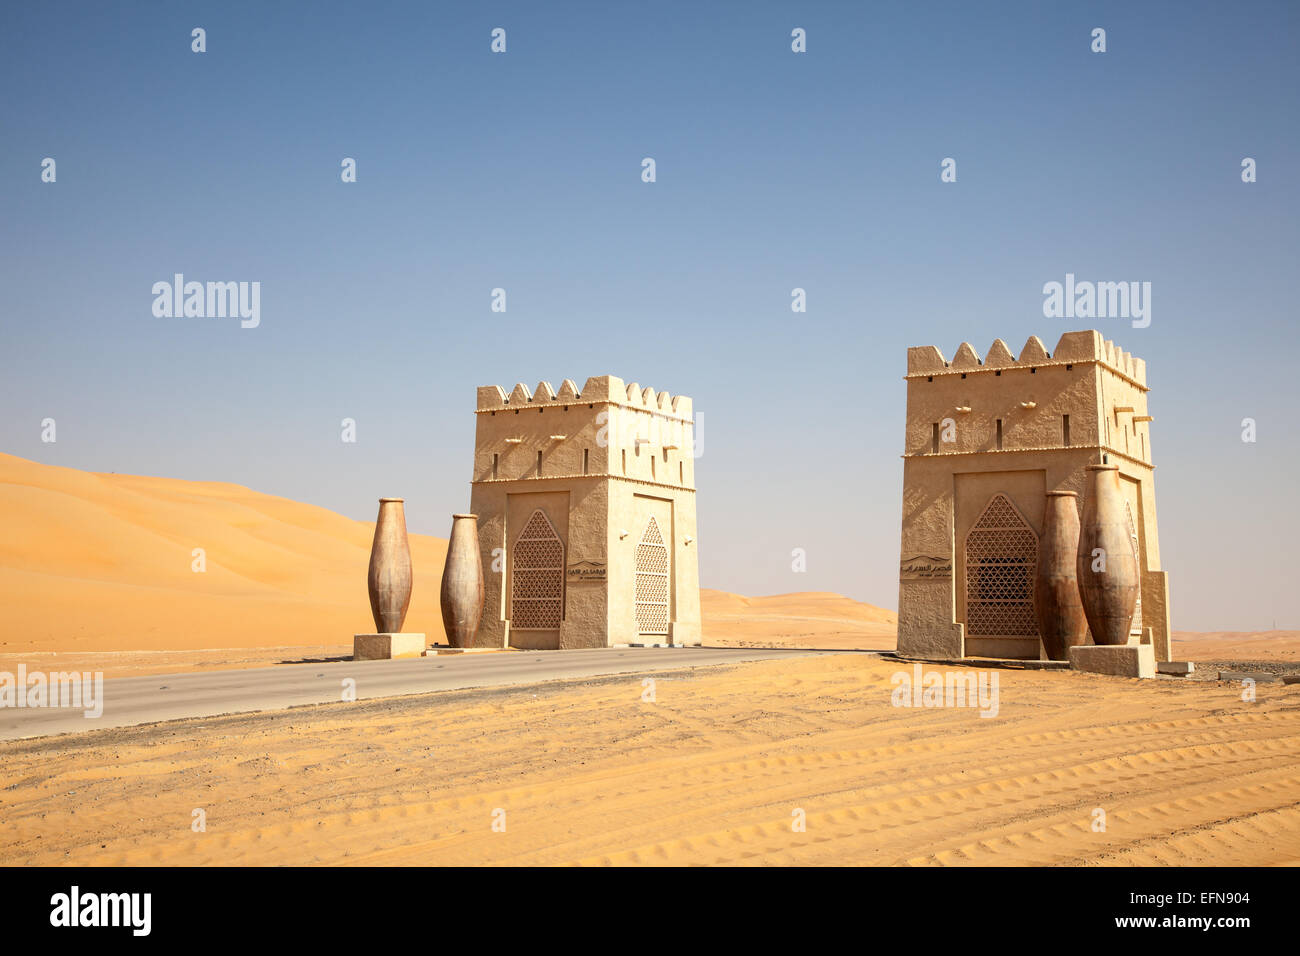 Gate to a desert resort in Abu Dhabi, United Arab Emirates Stock Photo